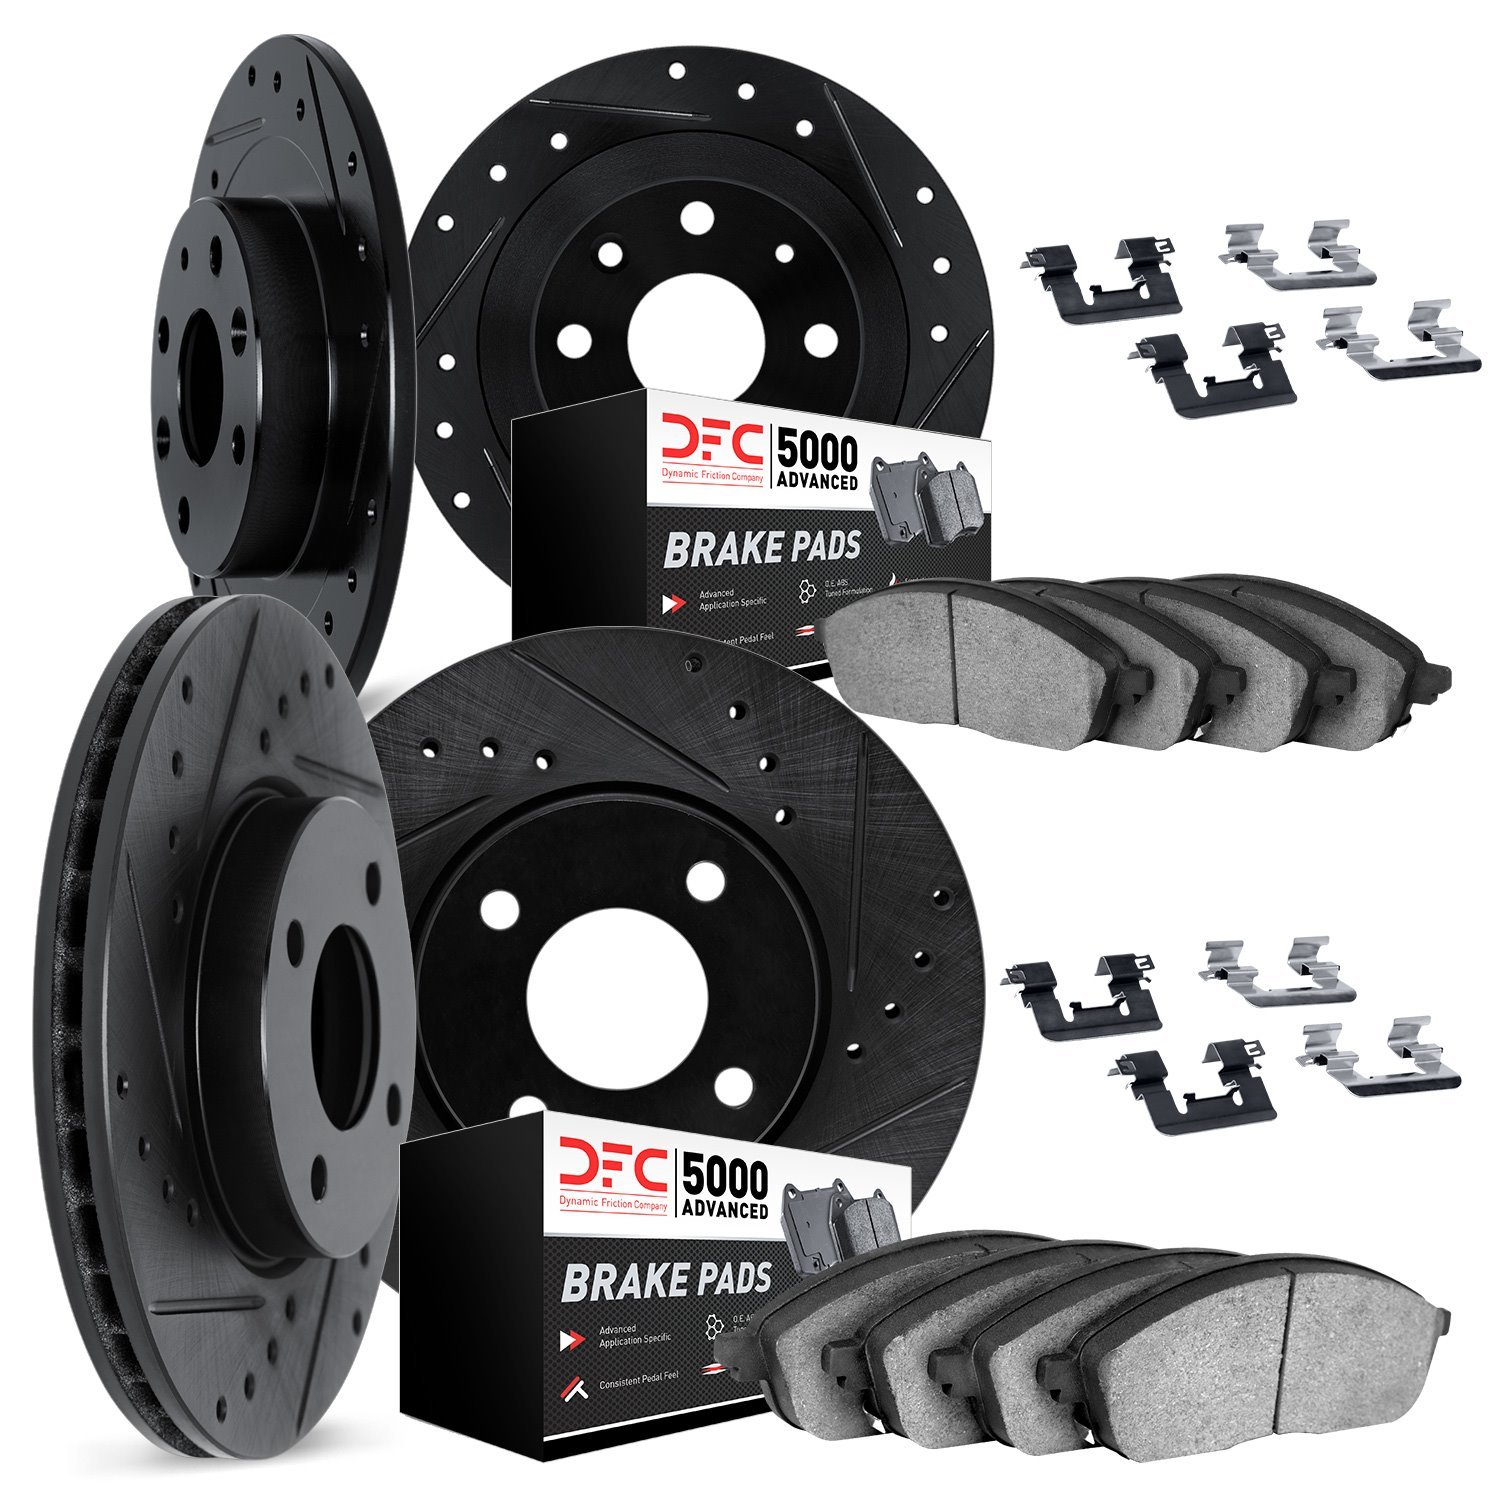 8514-03071 Drilled/Slotted Brake Rotors w/5000 Advanced Brake Pads Kit & Hardware [Black], Fits Select Kia/Hyundai/Genesis, Posi